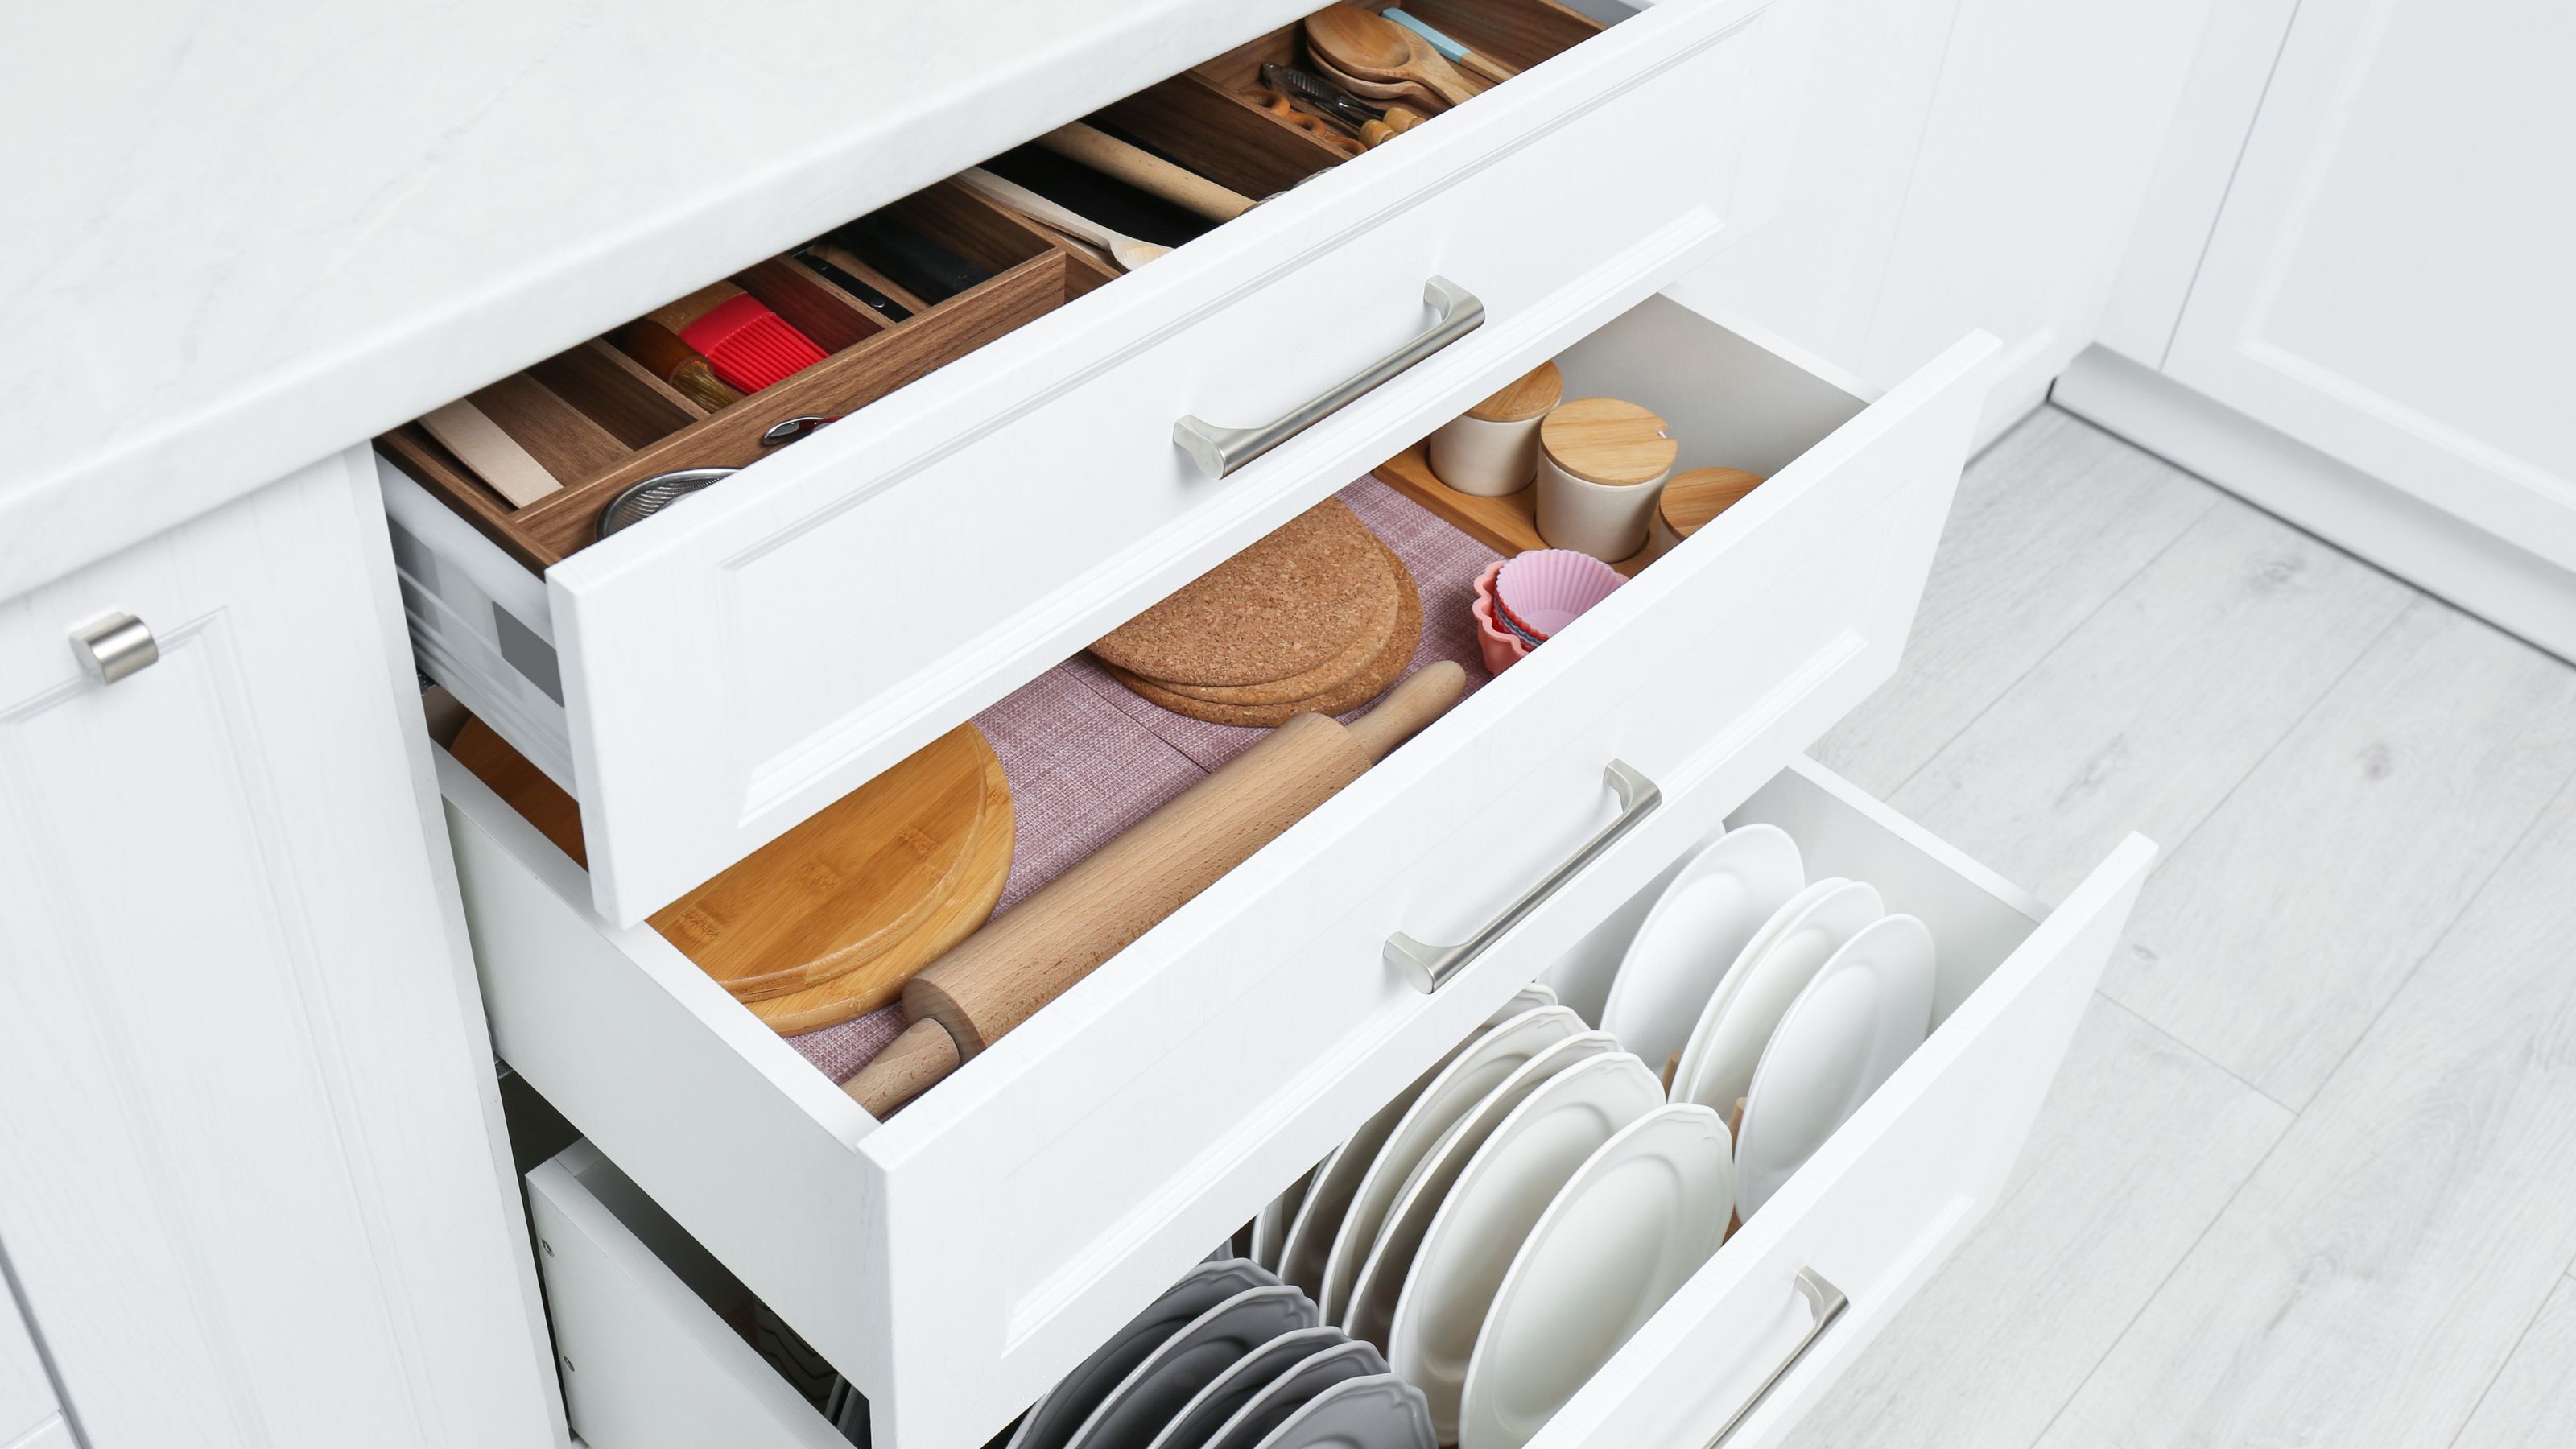 How to organize kitchen drawers: 12 ways to order essentials